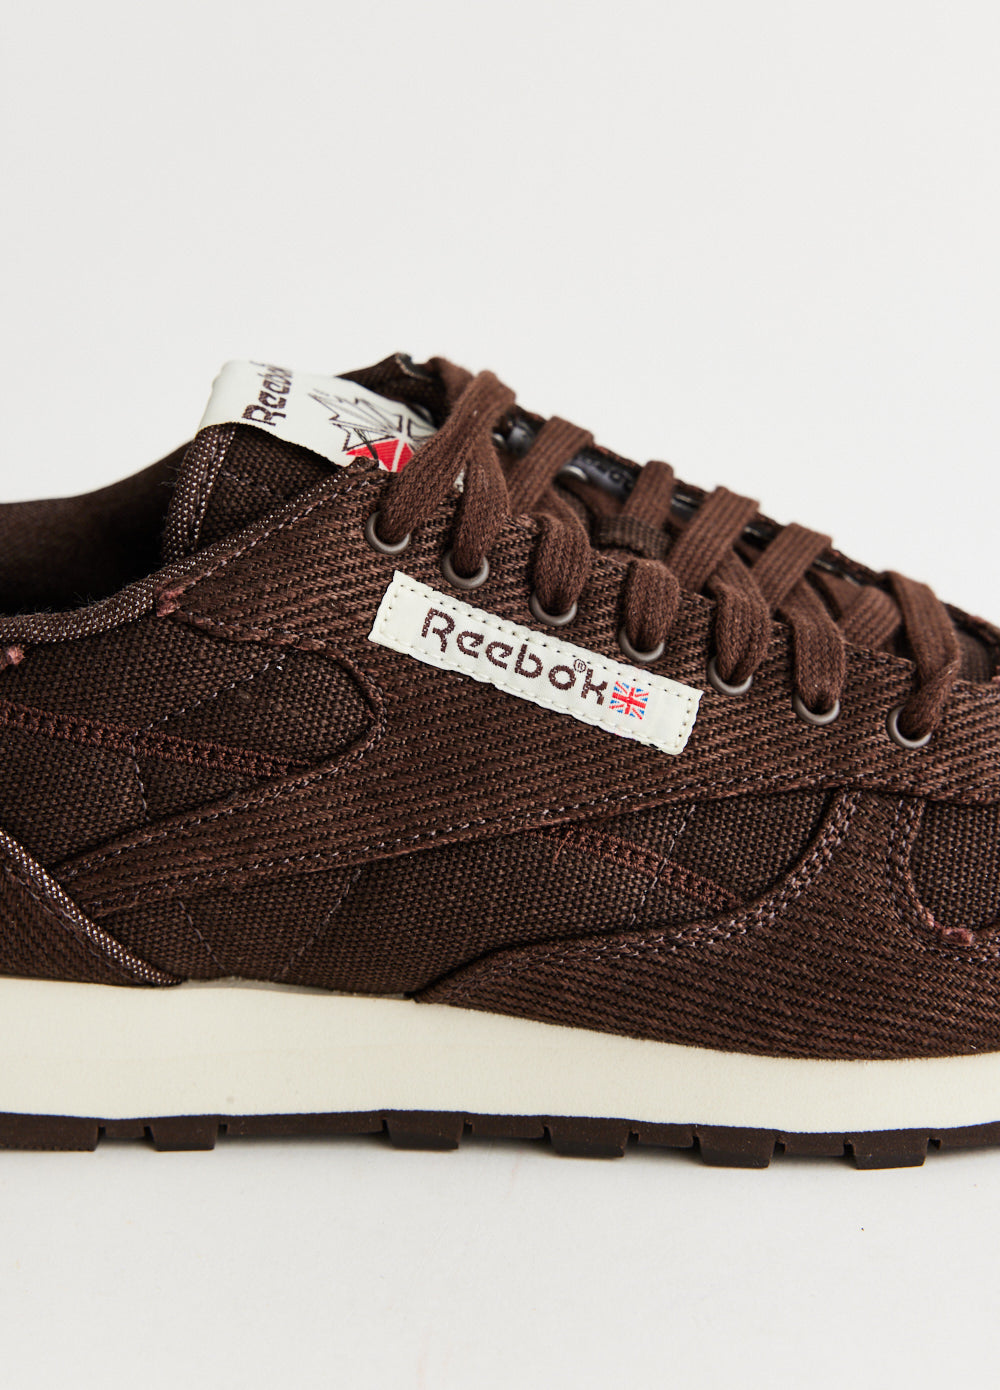 Reebok Classic Leather MCCS - Sneaker Bar Detroit